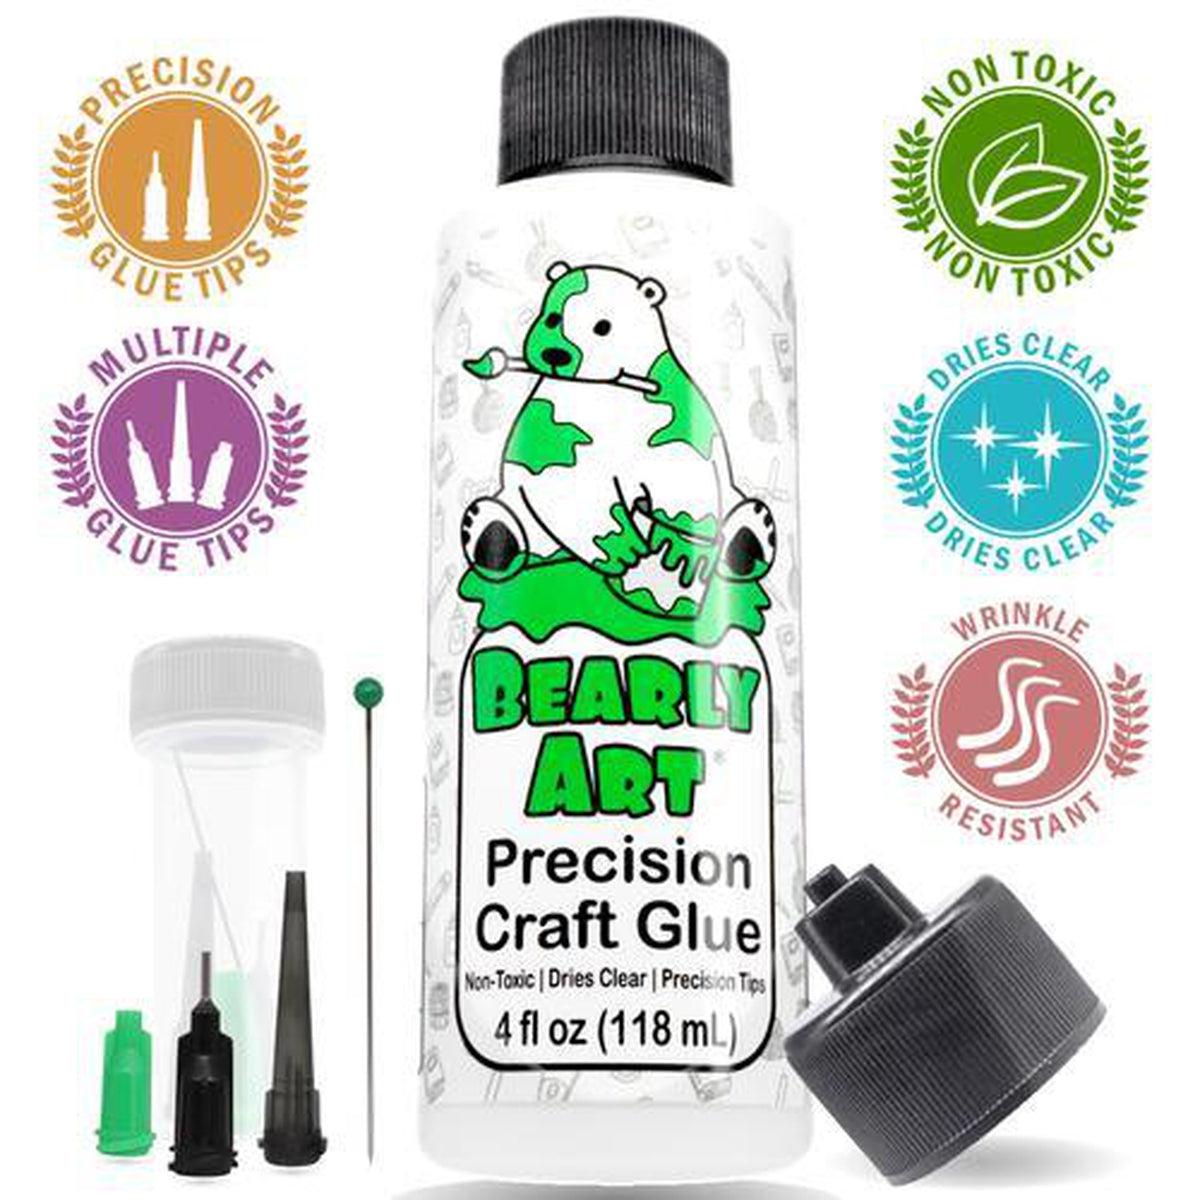 Bearly Art Precision Craft Glue - THE ORIGINAL - Kat Scrappiness